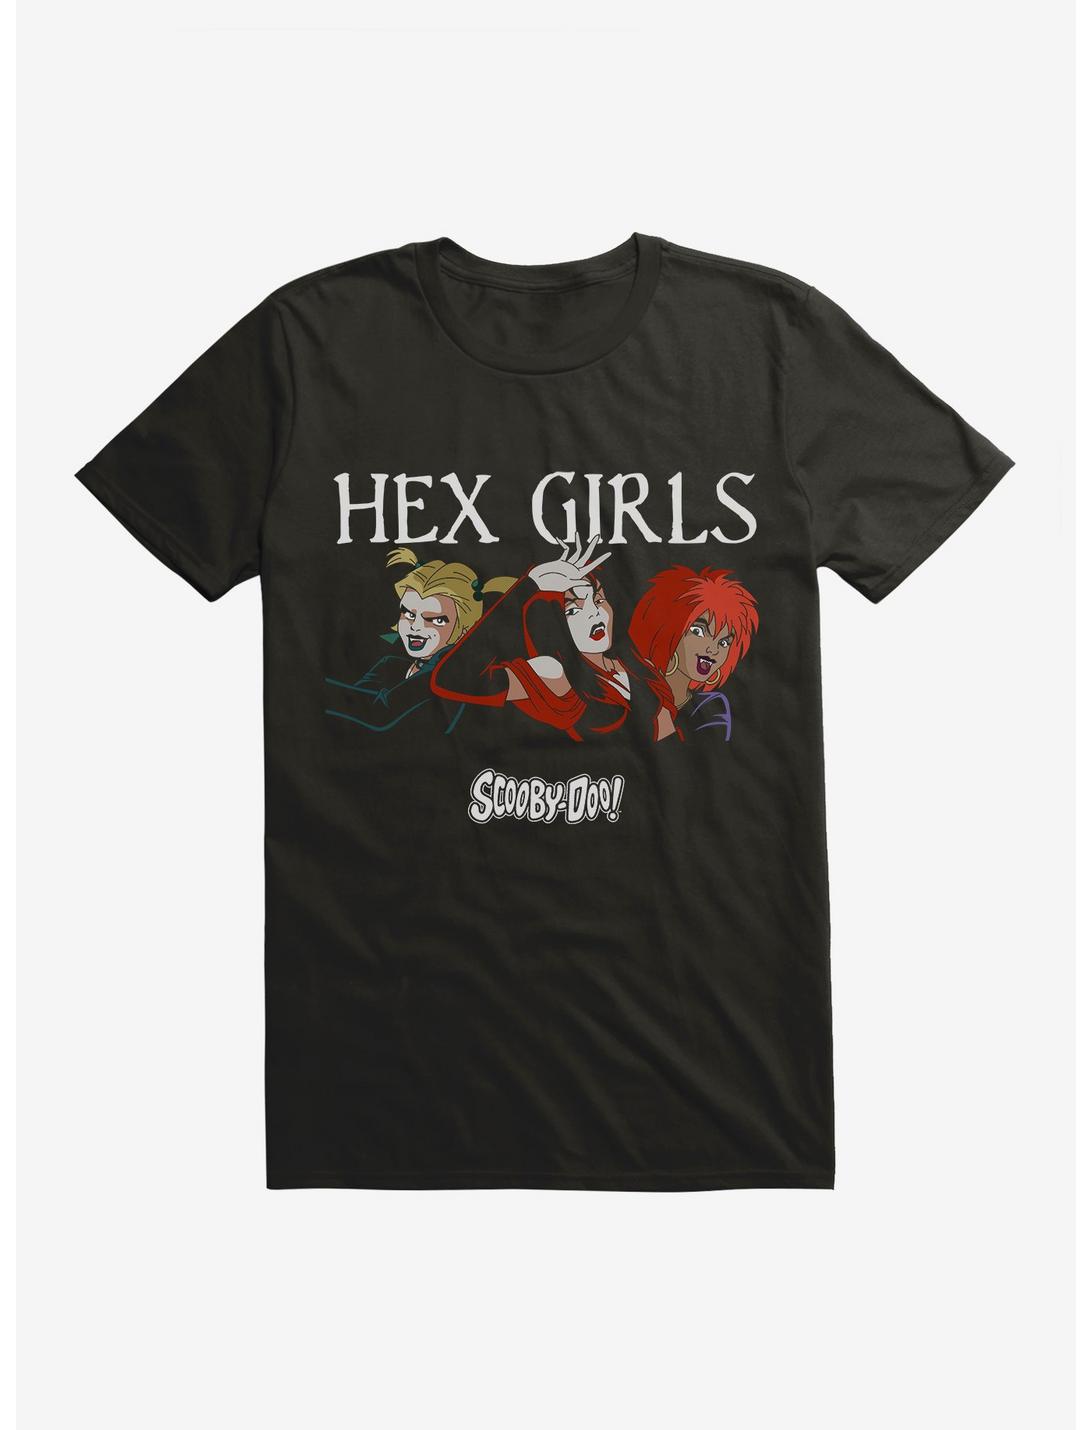 Scooby-Doo The Hex Girls Rock Band T-Shirt, BLACK, hi-res